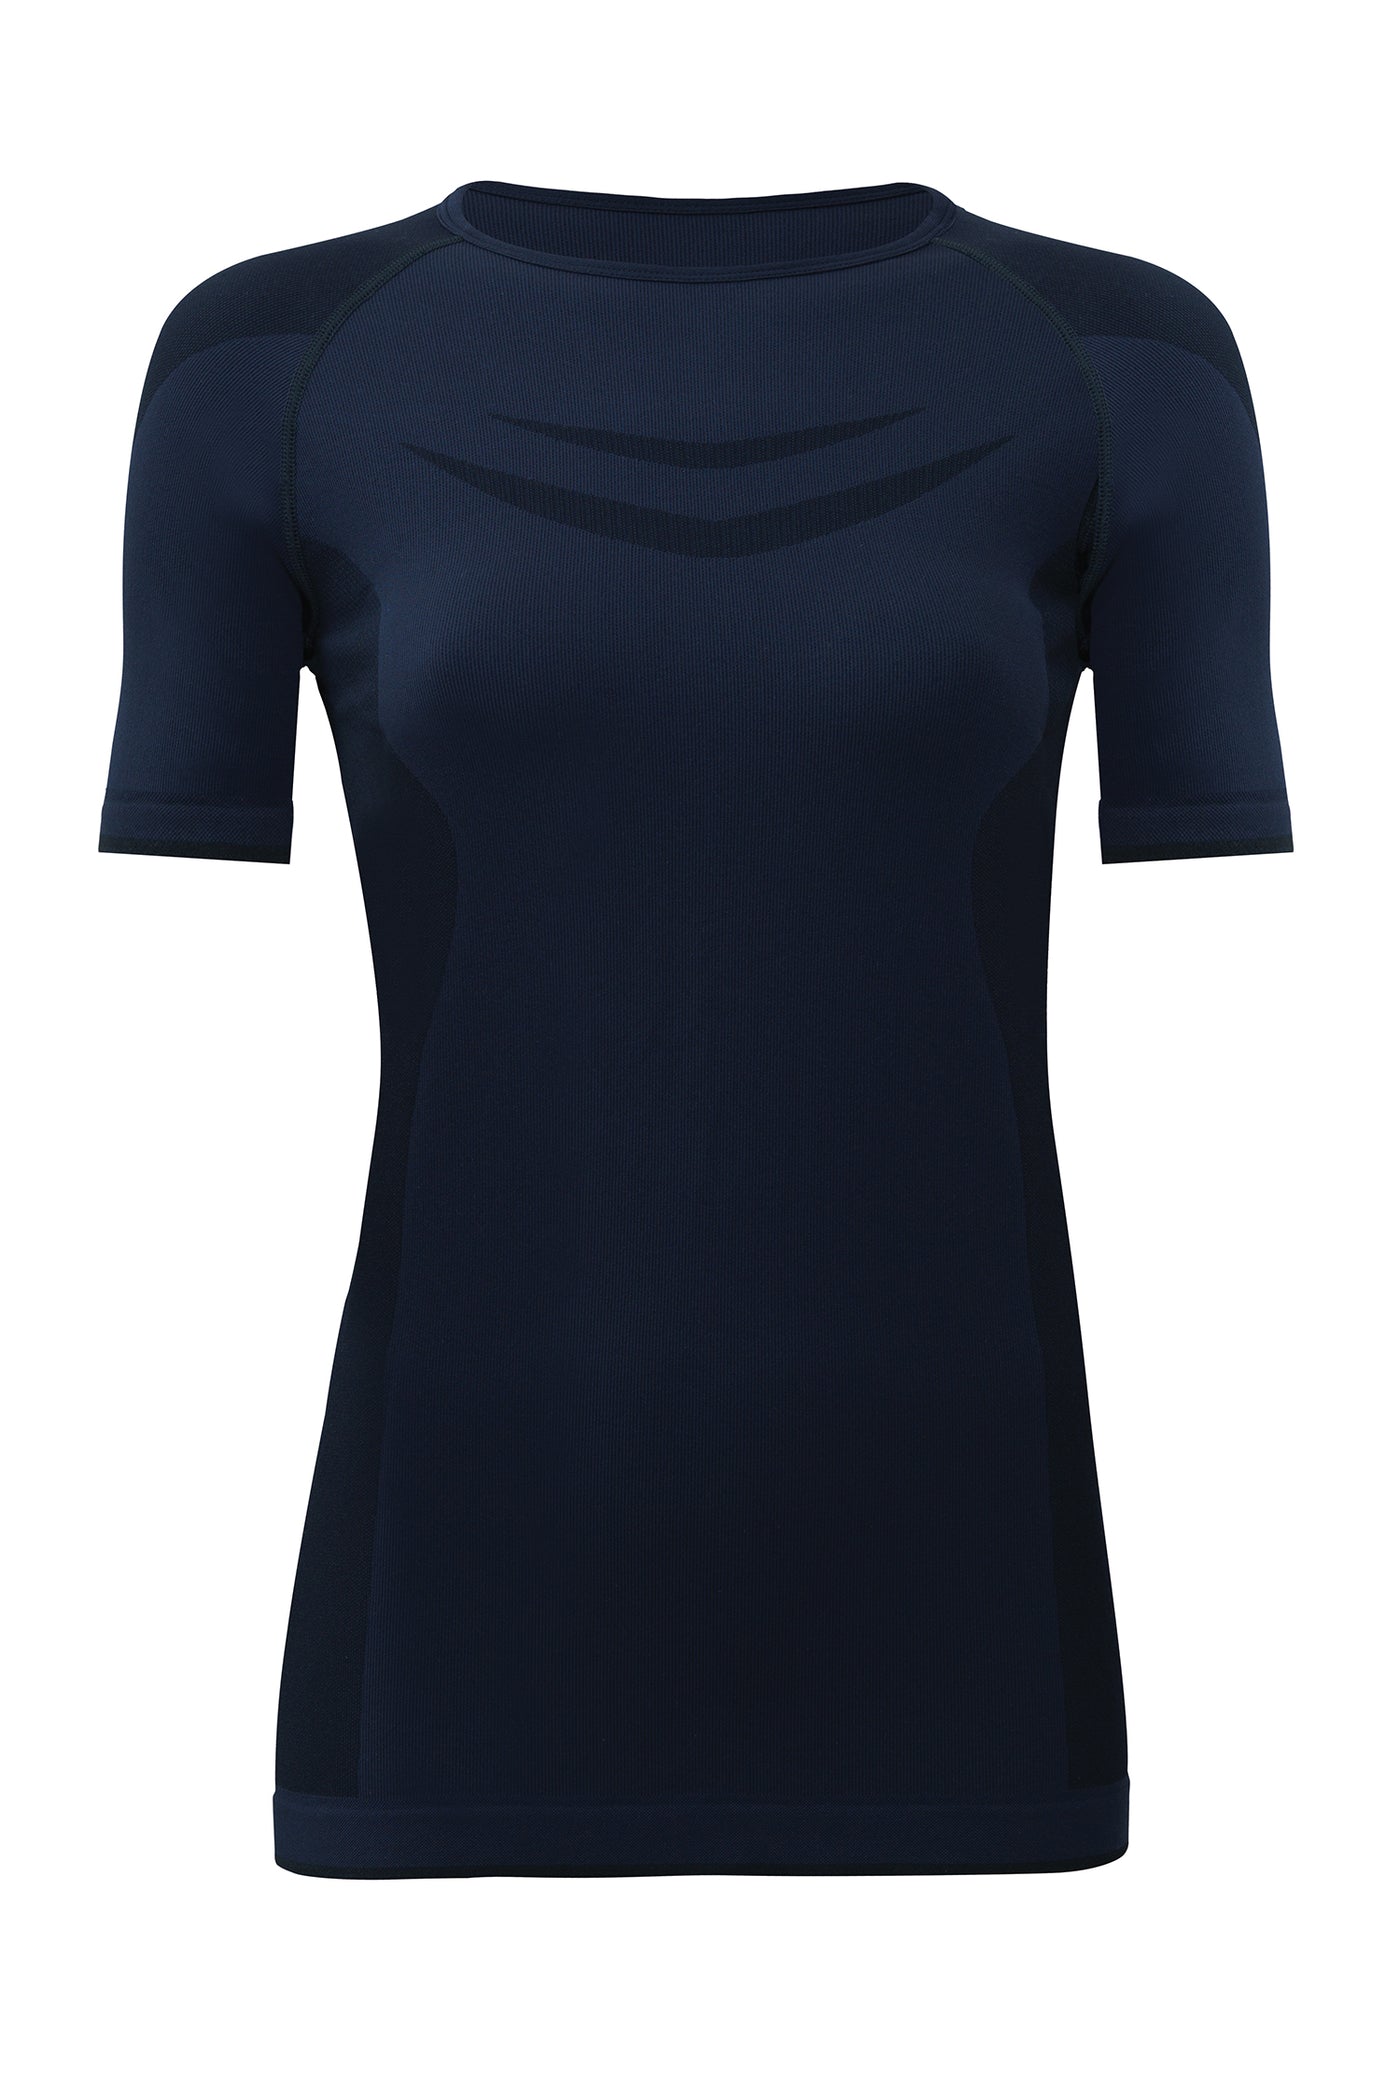 blackspade-Ladies' thermal seamless t-shirt-9570, level-2-underwear-black